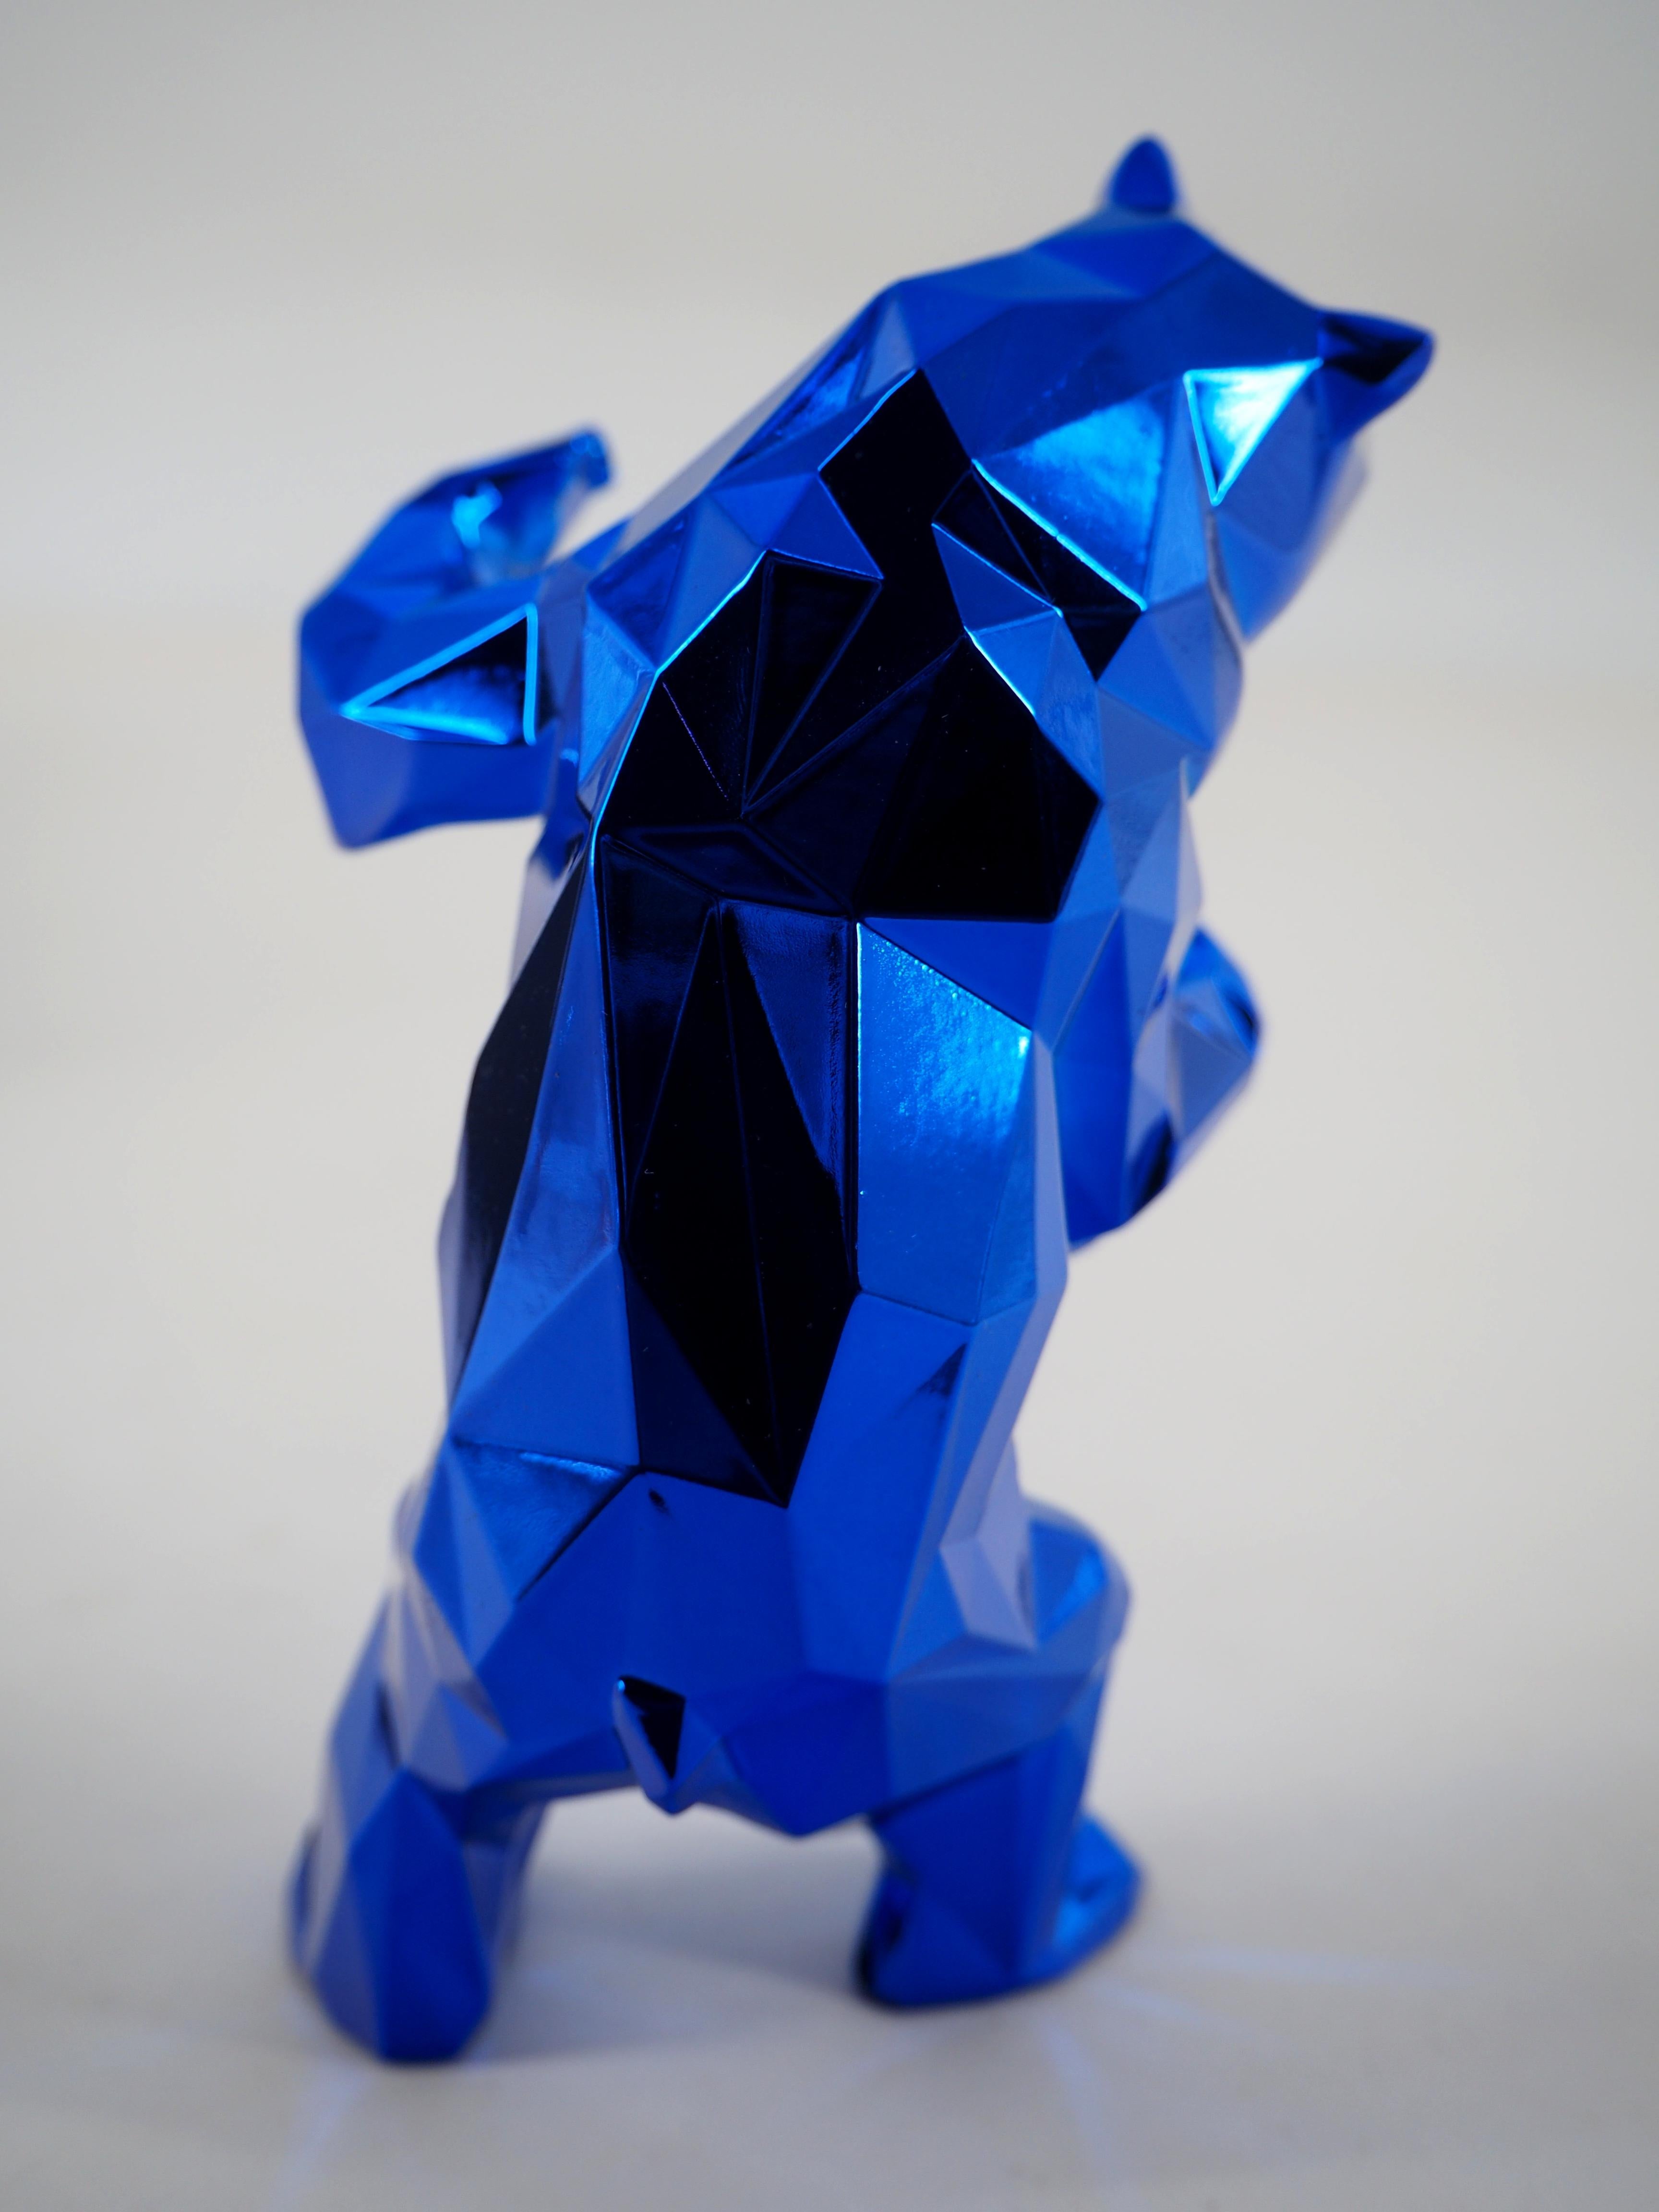 Standing Bear (Blue Edition) - Sculpture in original box with artist certificate - Gray Figurative Sculpture by Richard Orlinski